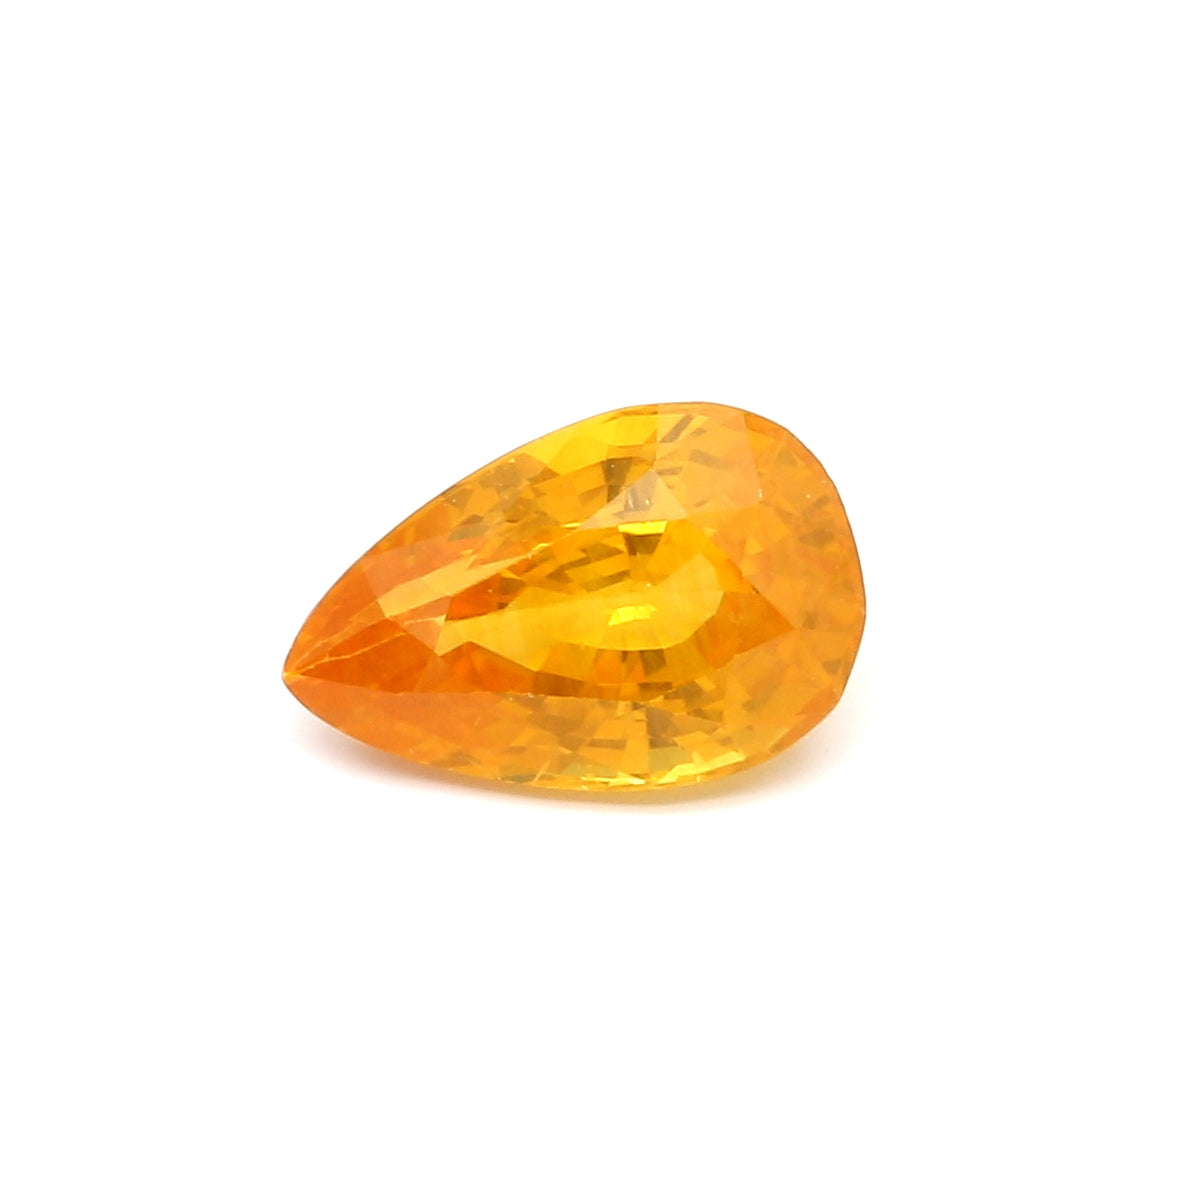 2.49ct Orangy Yellow, Pear Shape Sapphire, Heated, Sri Lanka - 10.36 x 6.71 x 4.78mm